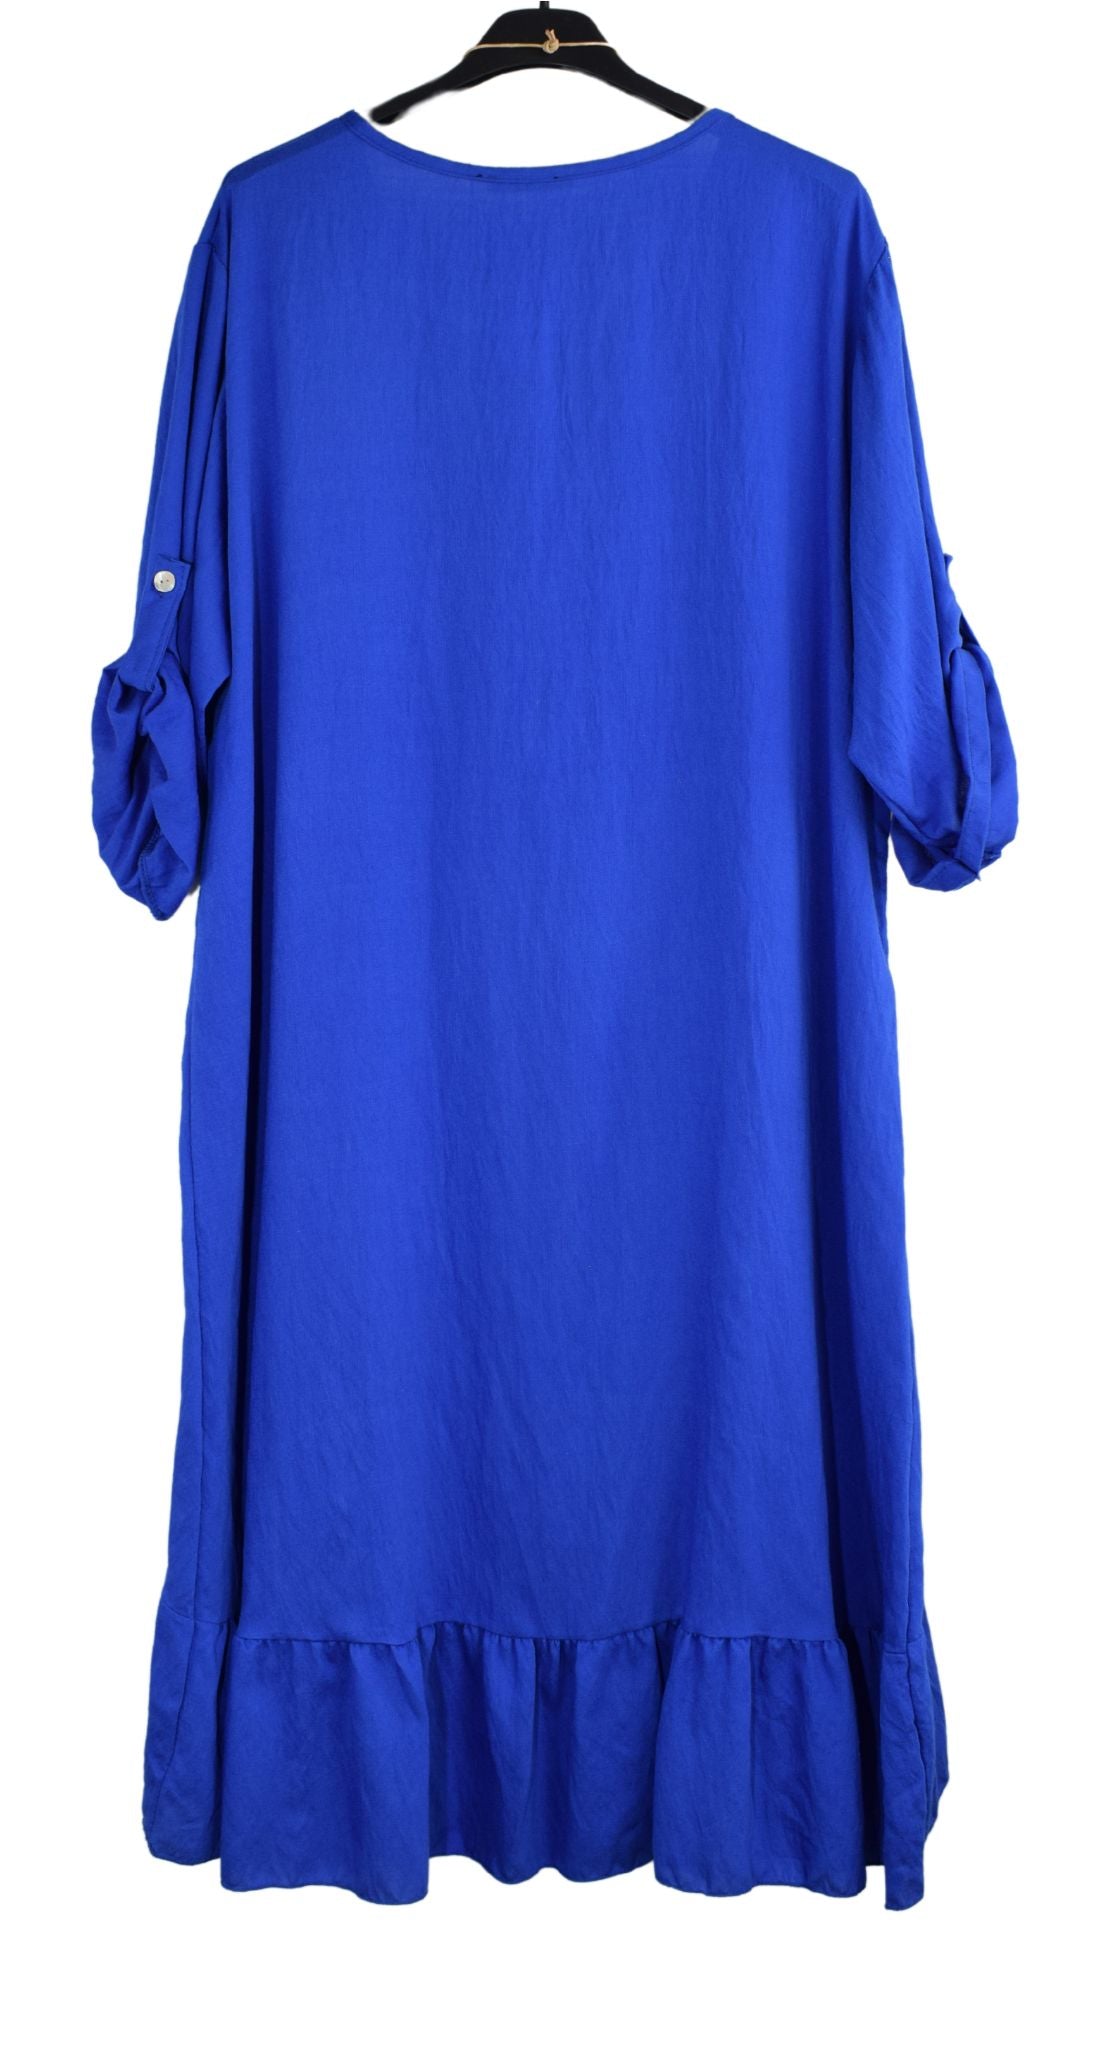 Frill Midi Flared Dress with Hi-Lo Hemline Women's Italian Lagenlook Dress for Summer